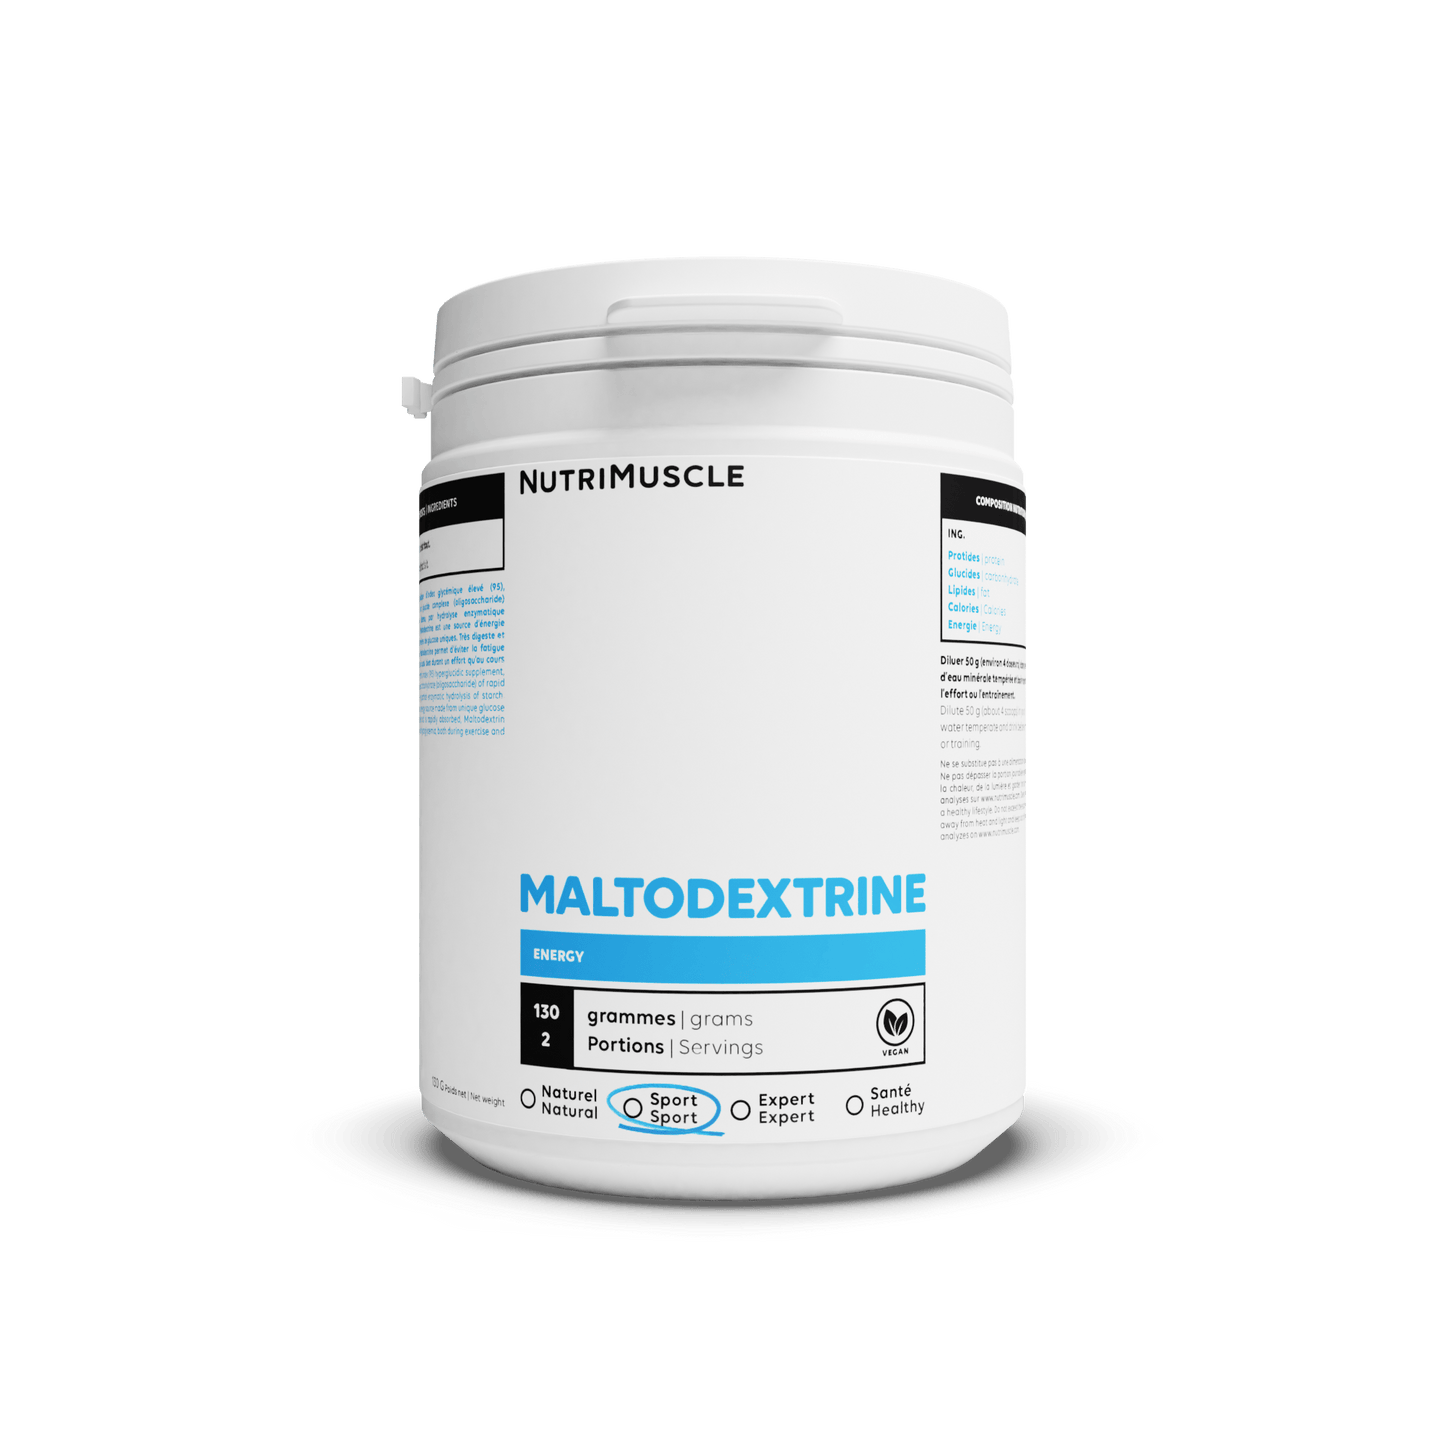 Nutrimuscle Glucides Poudre / 130 g (3 doses) Maltodextrine